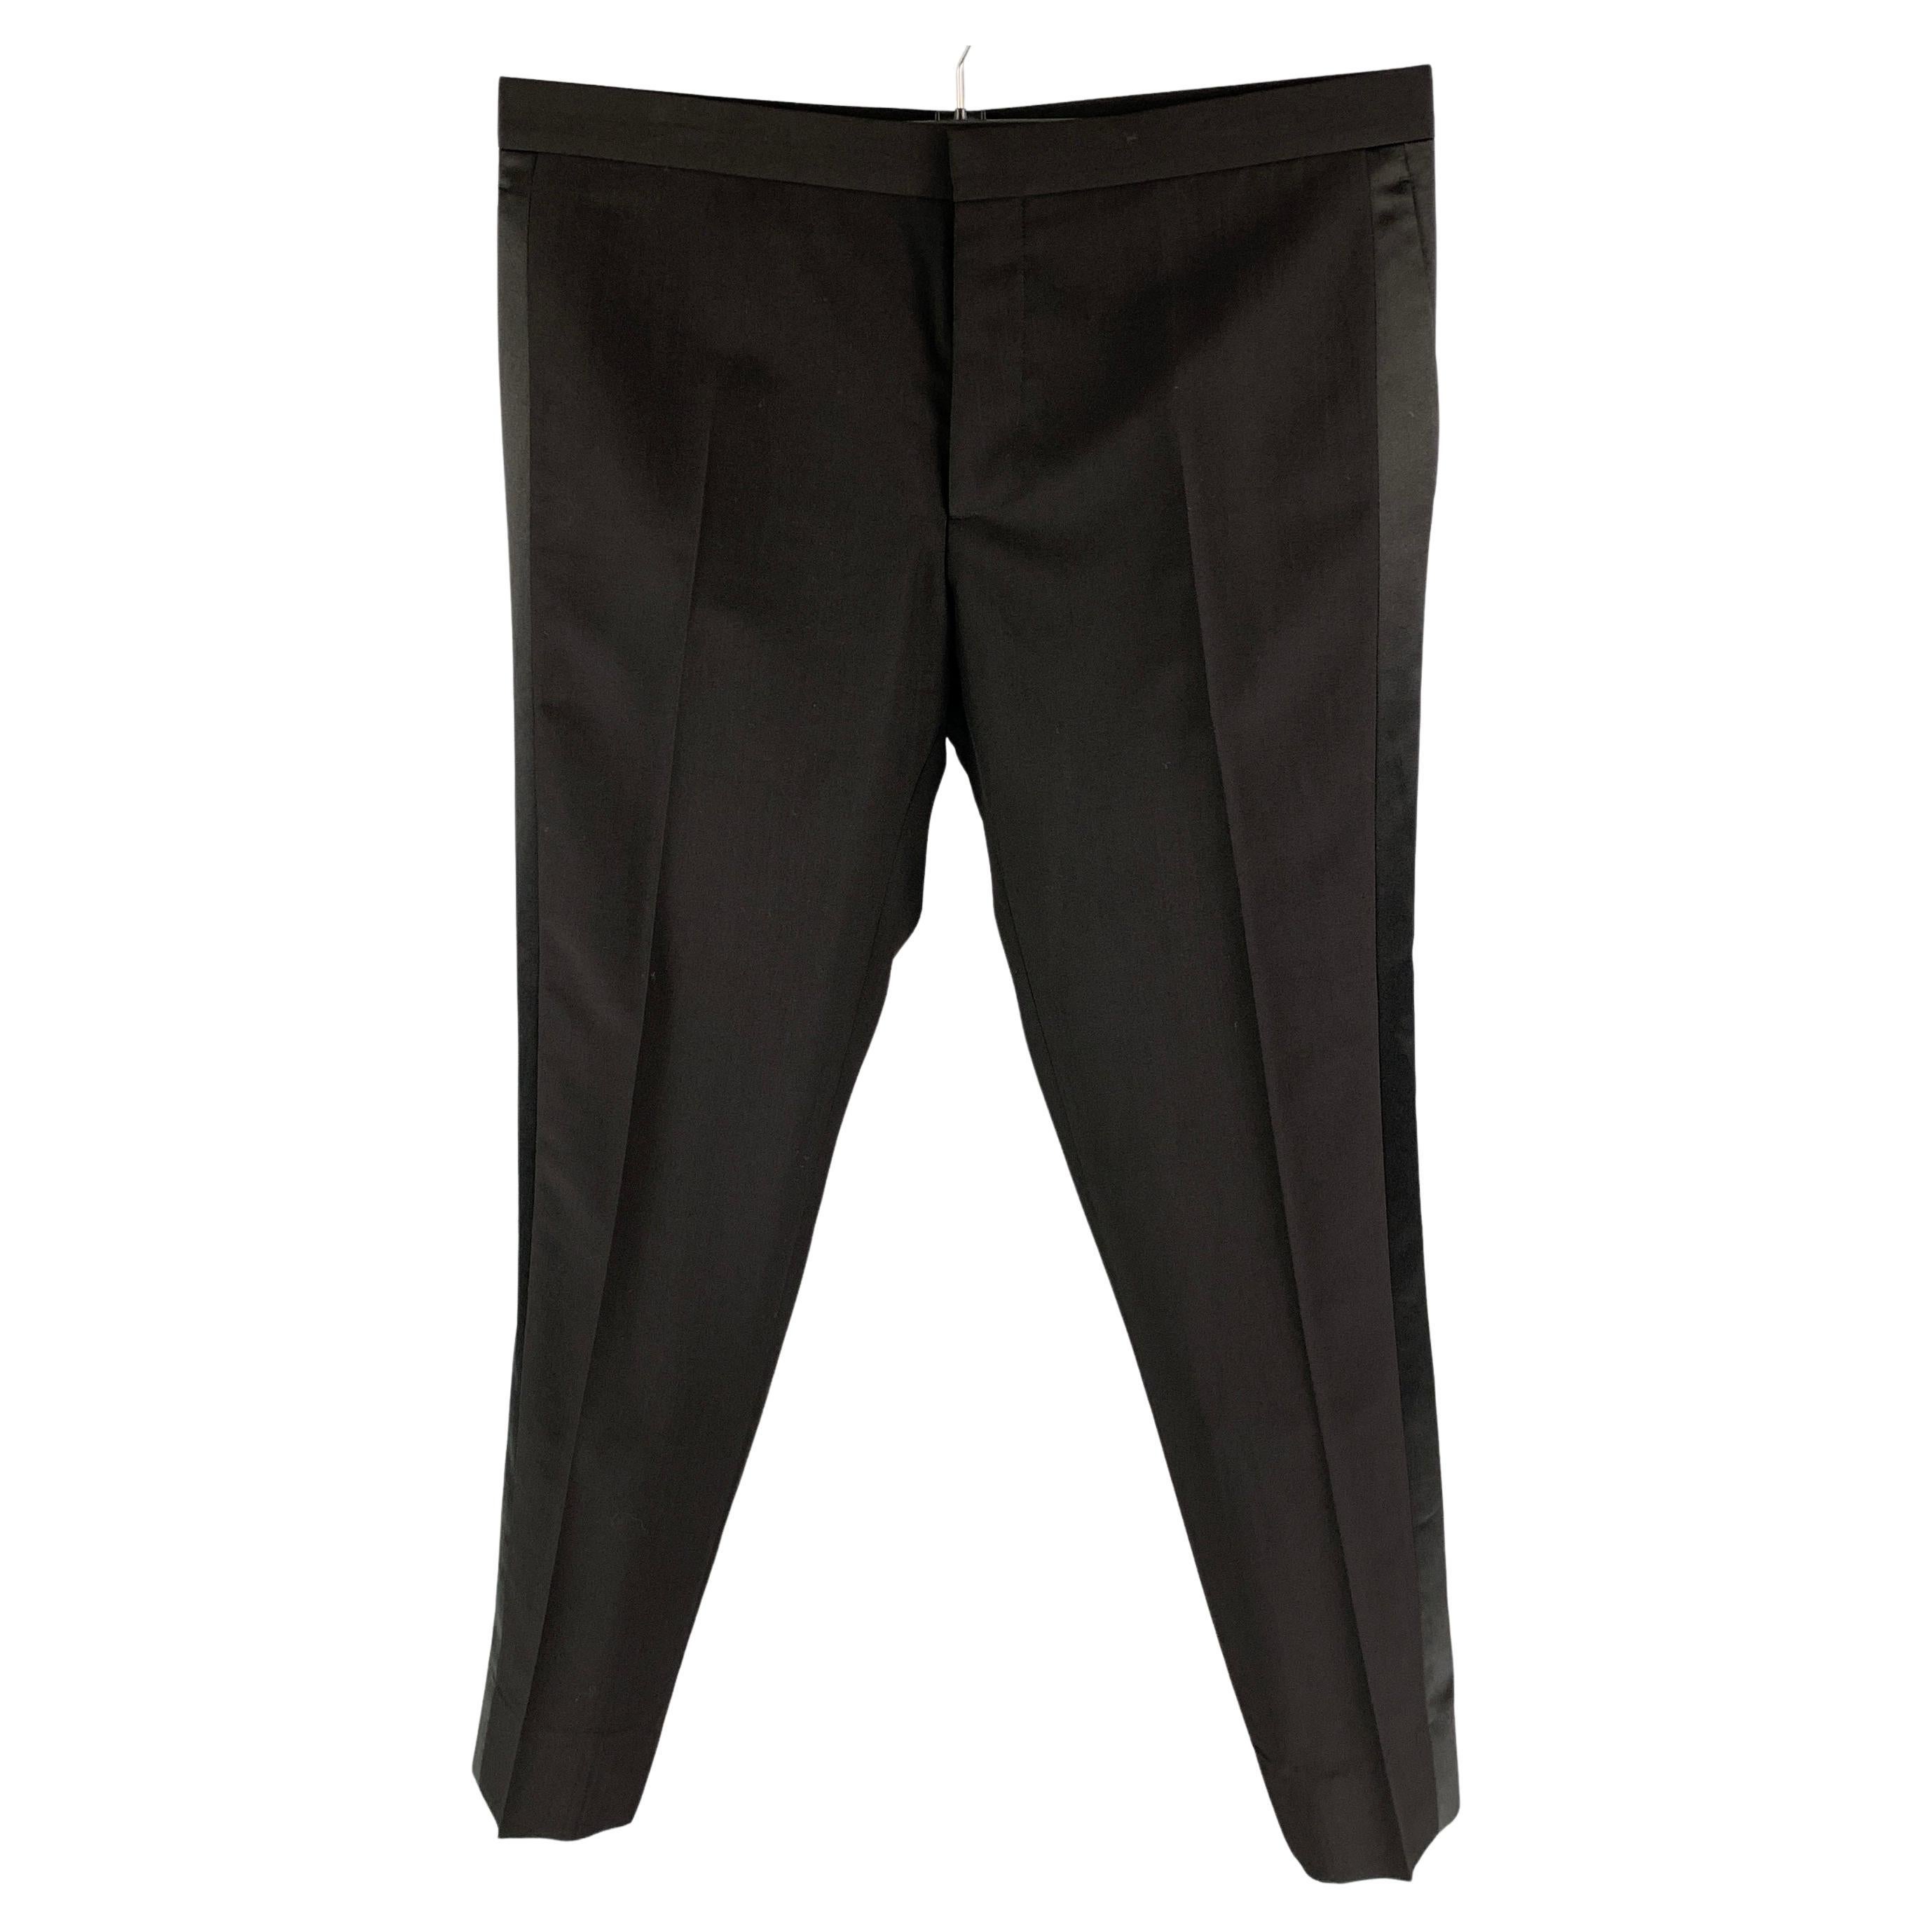 DIOR HOMME Size 36 Black Wool / Mohair Tuxedo Dress Pants